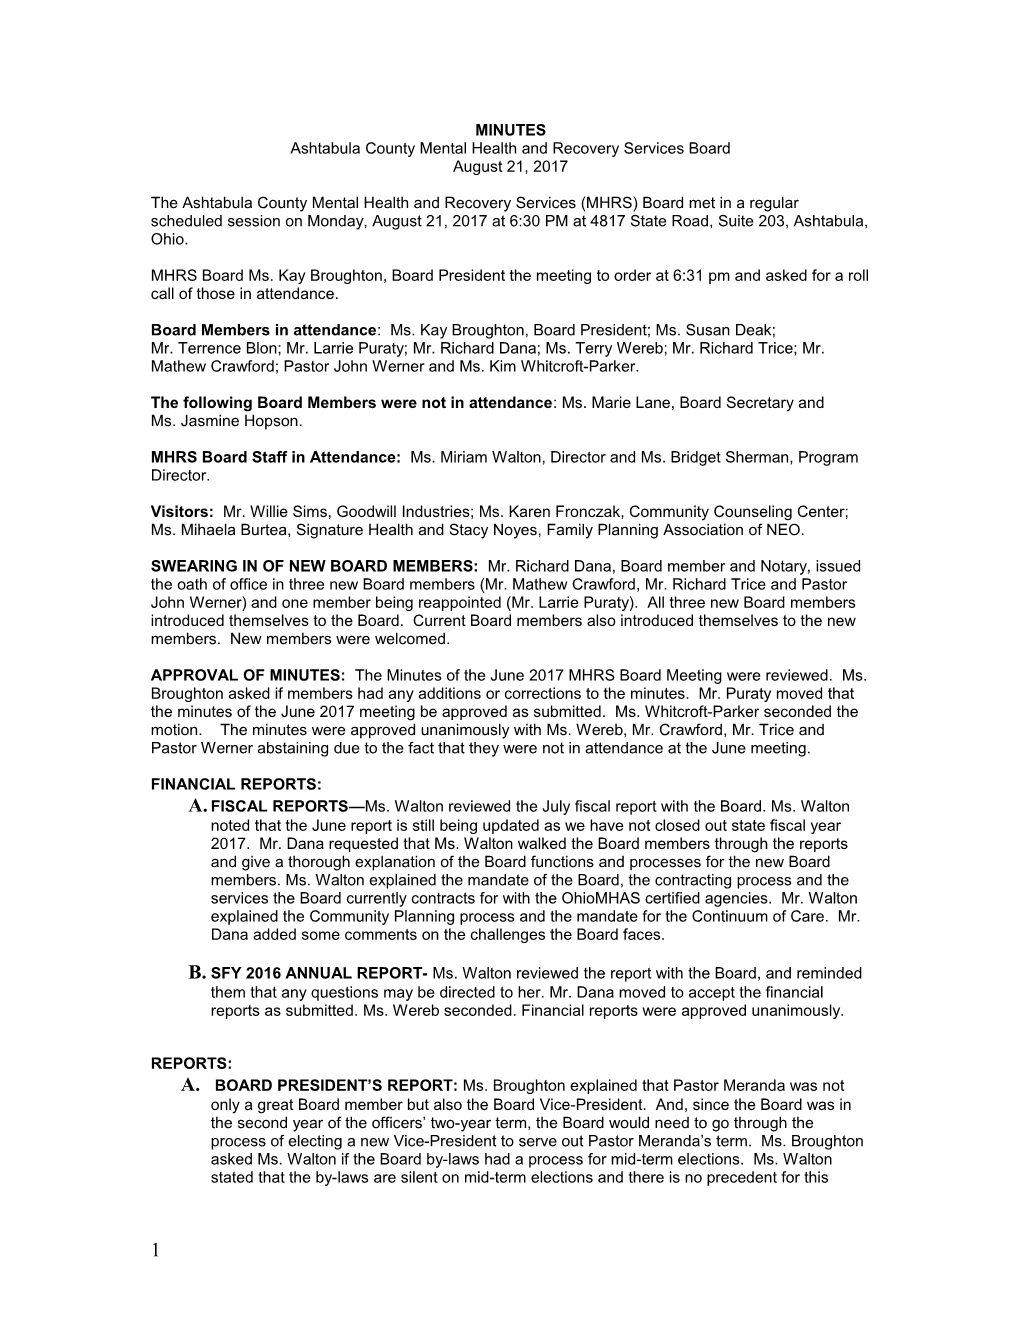 MHRS Board Minutes October 17 2007